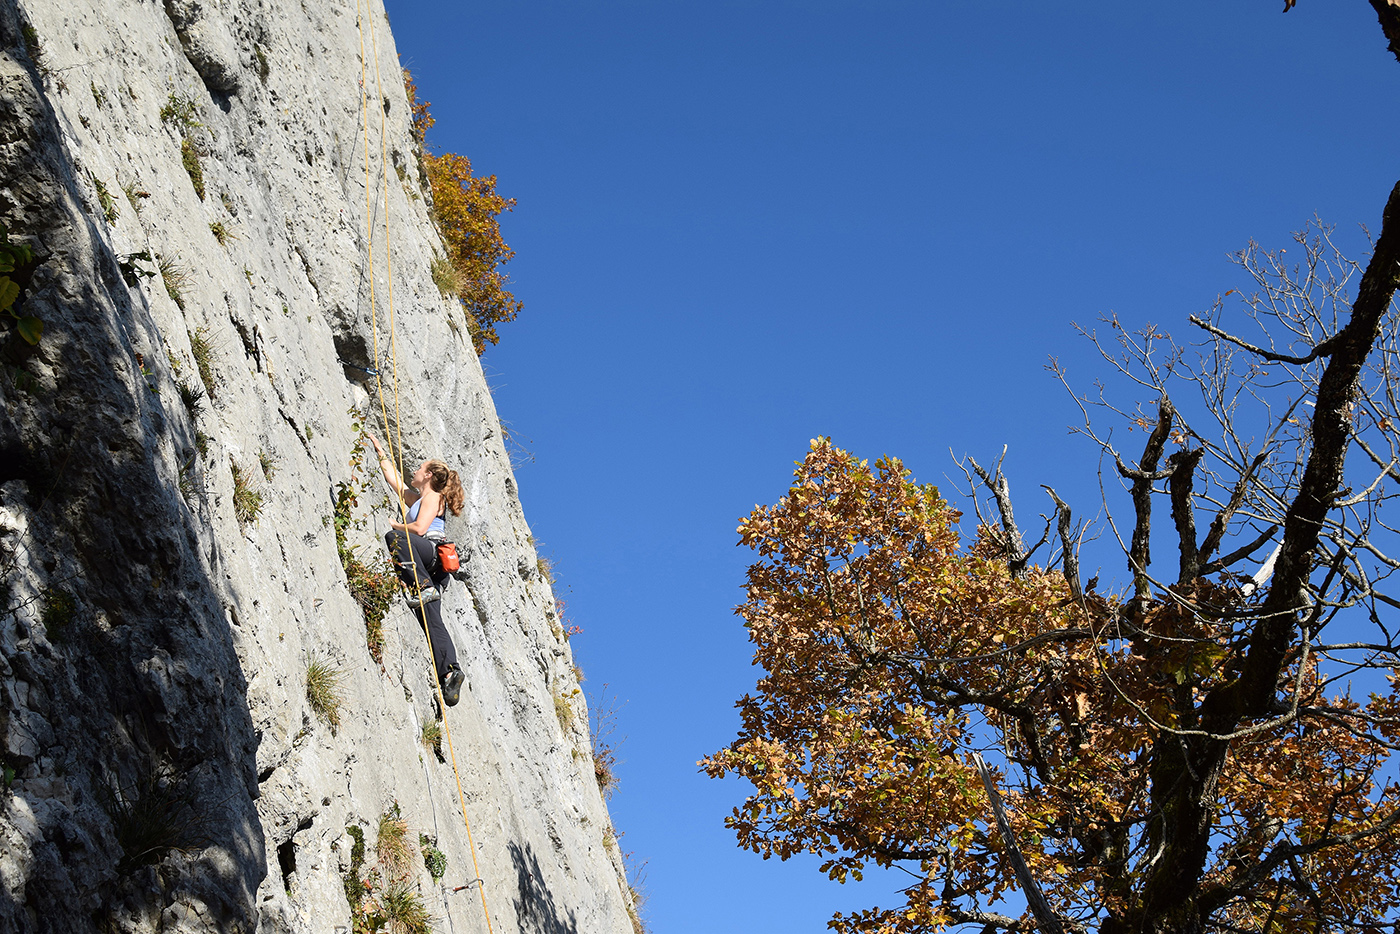 Women rock climbing on a large rockface